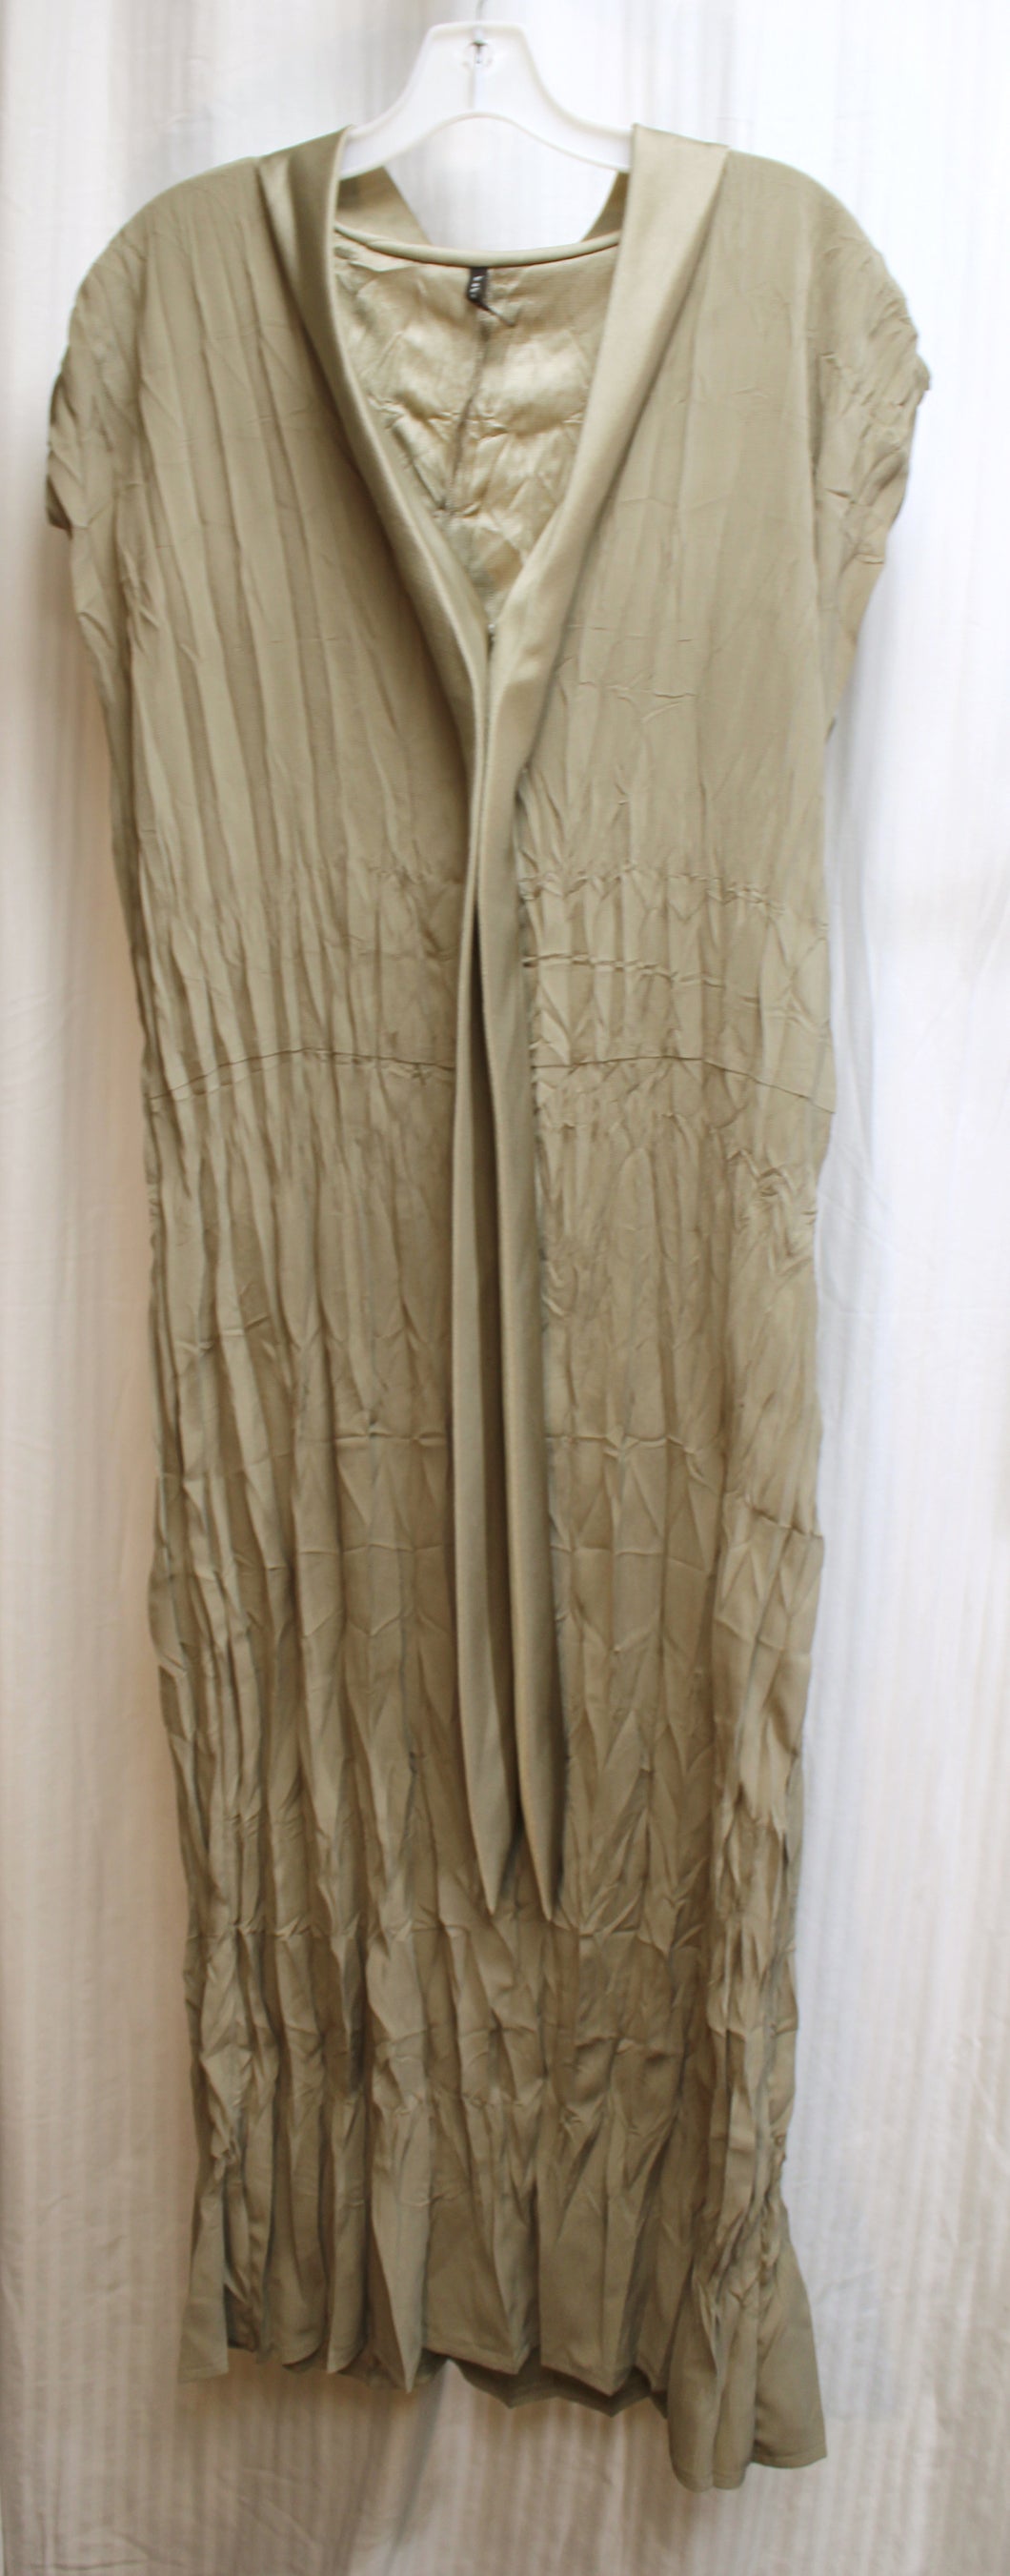 Babette (San Francisco Boutique) - Sleeveless Silky Light Weight Crinkle Dress w/ Long Neck Tie Detail- Size M